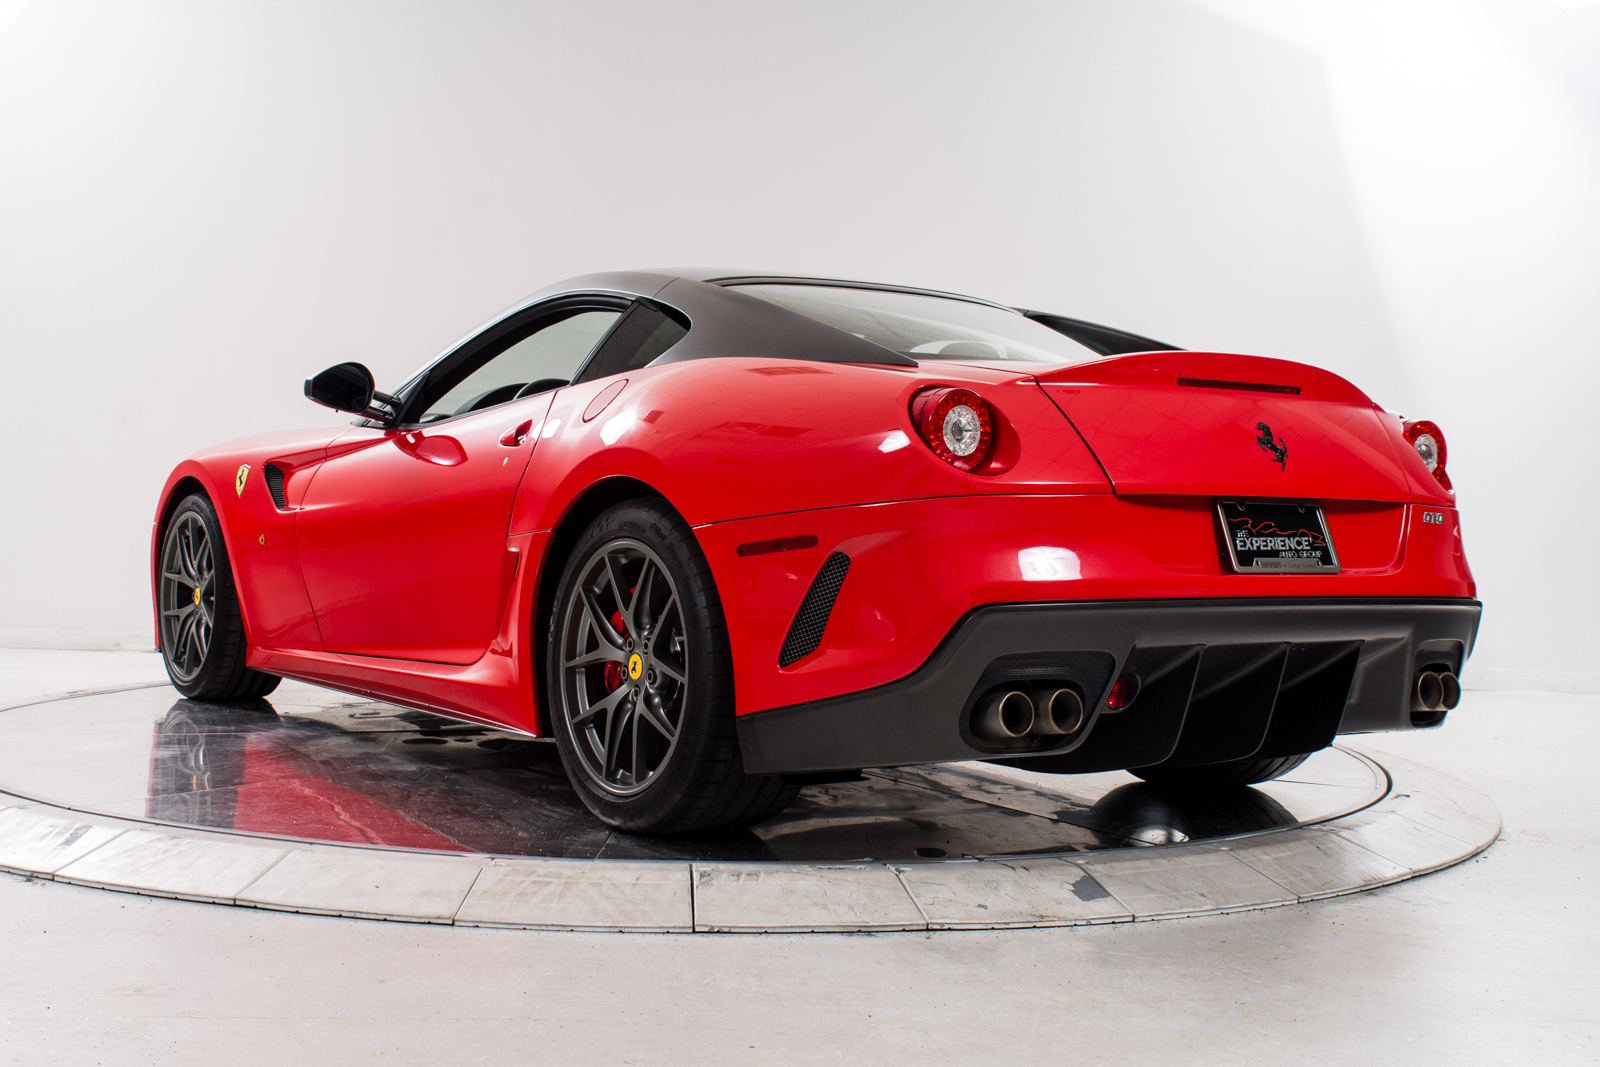 Gallery Ferrari 599 GTO For Sale  13 photos  GTspirit